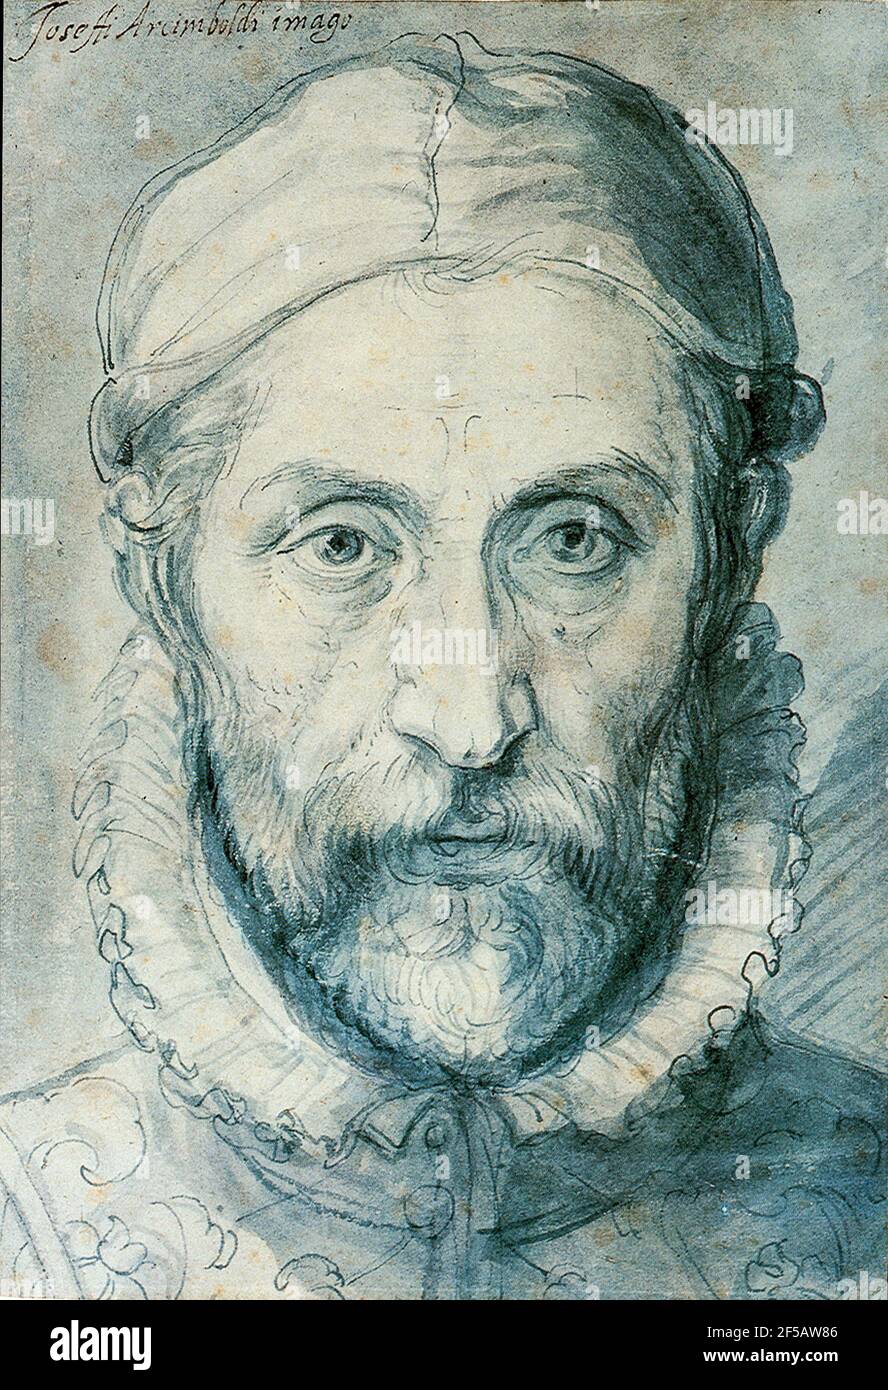 Giuseppe Arcimboldo - self portrait Before 1593 Stock Photo